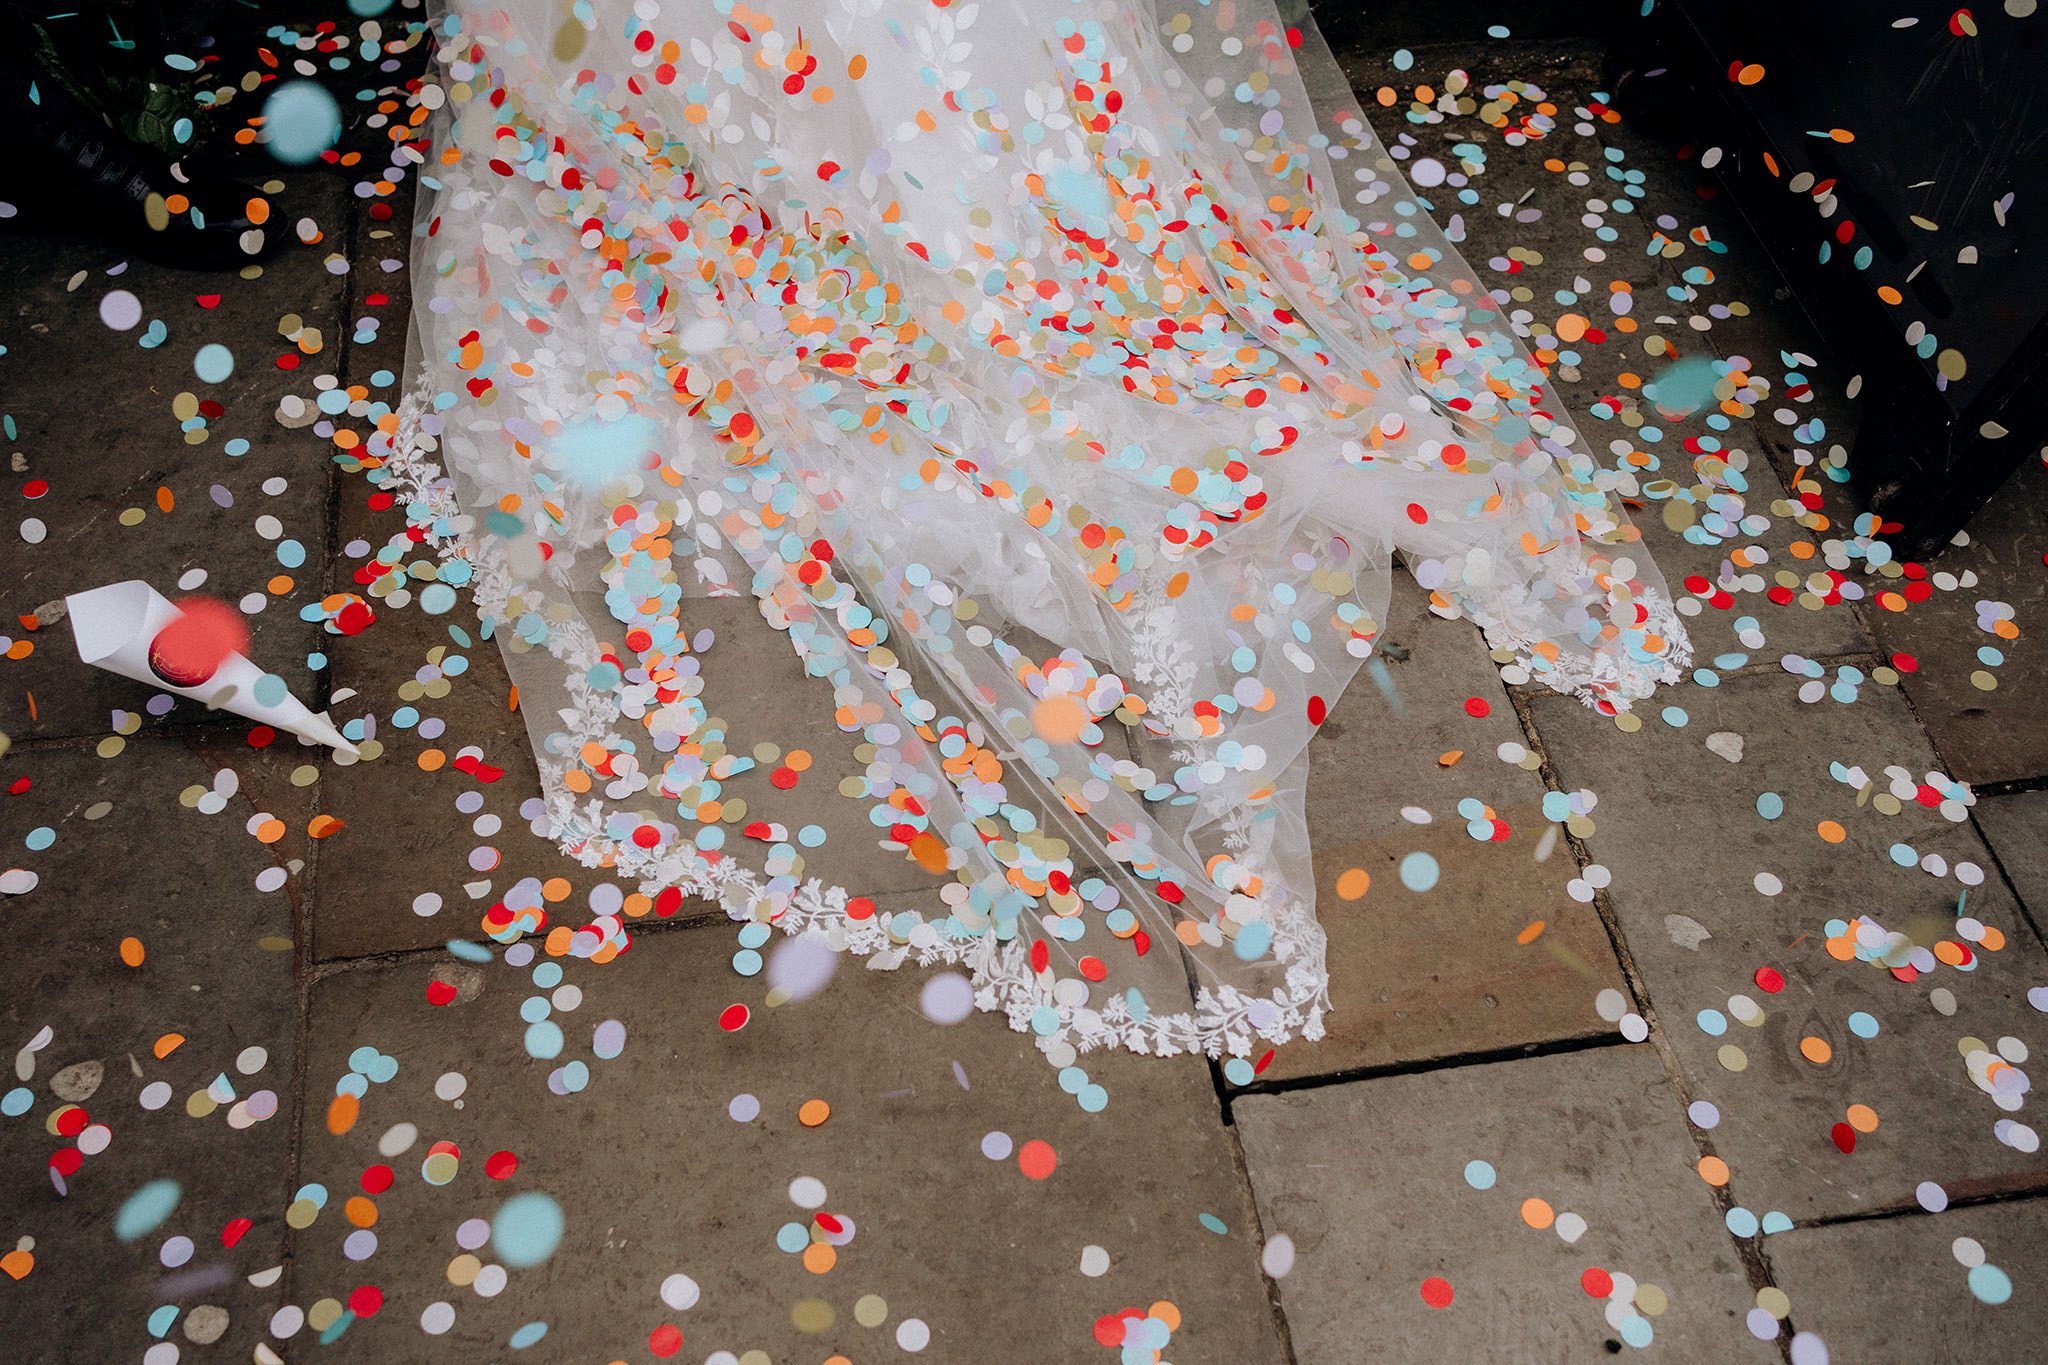 Confetti on the dress